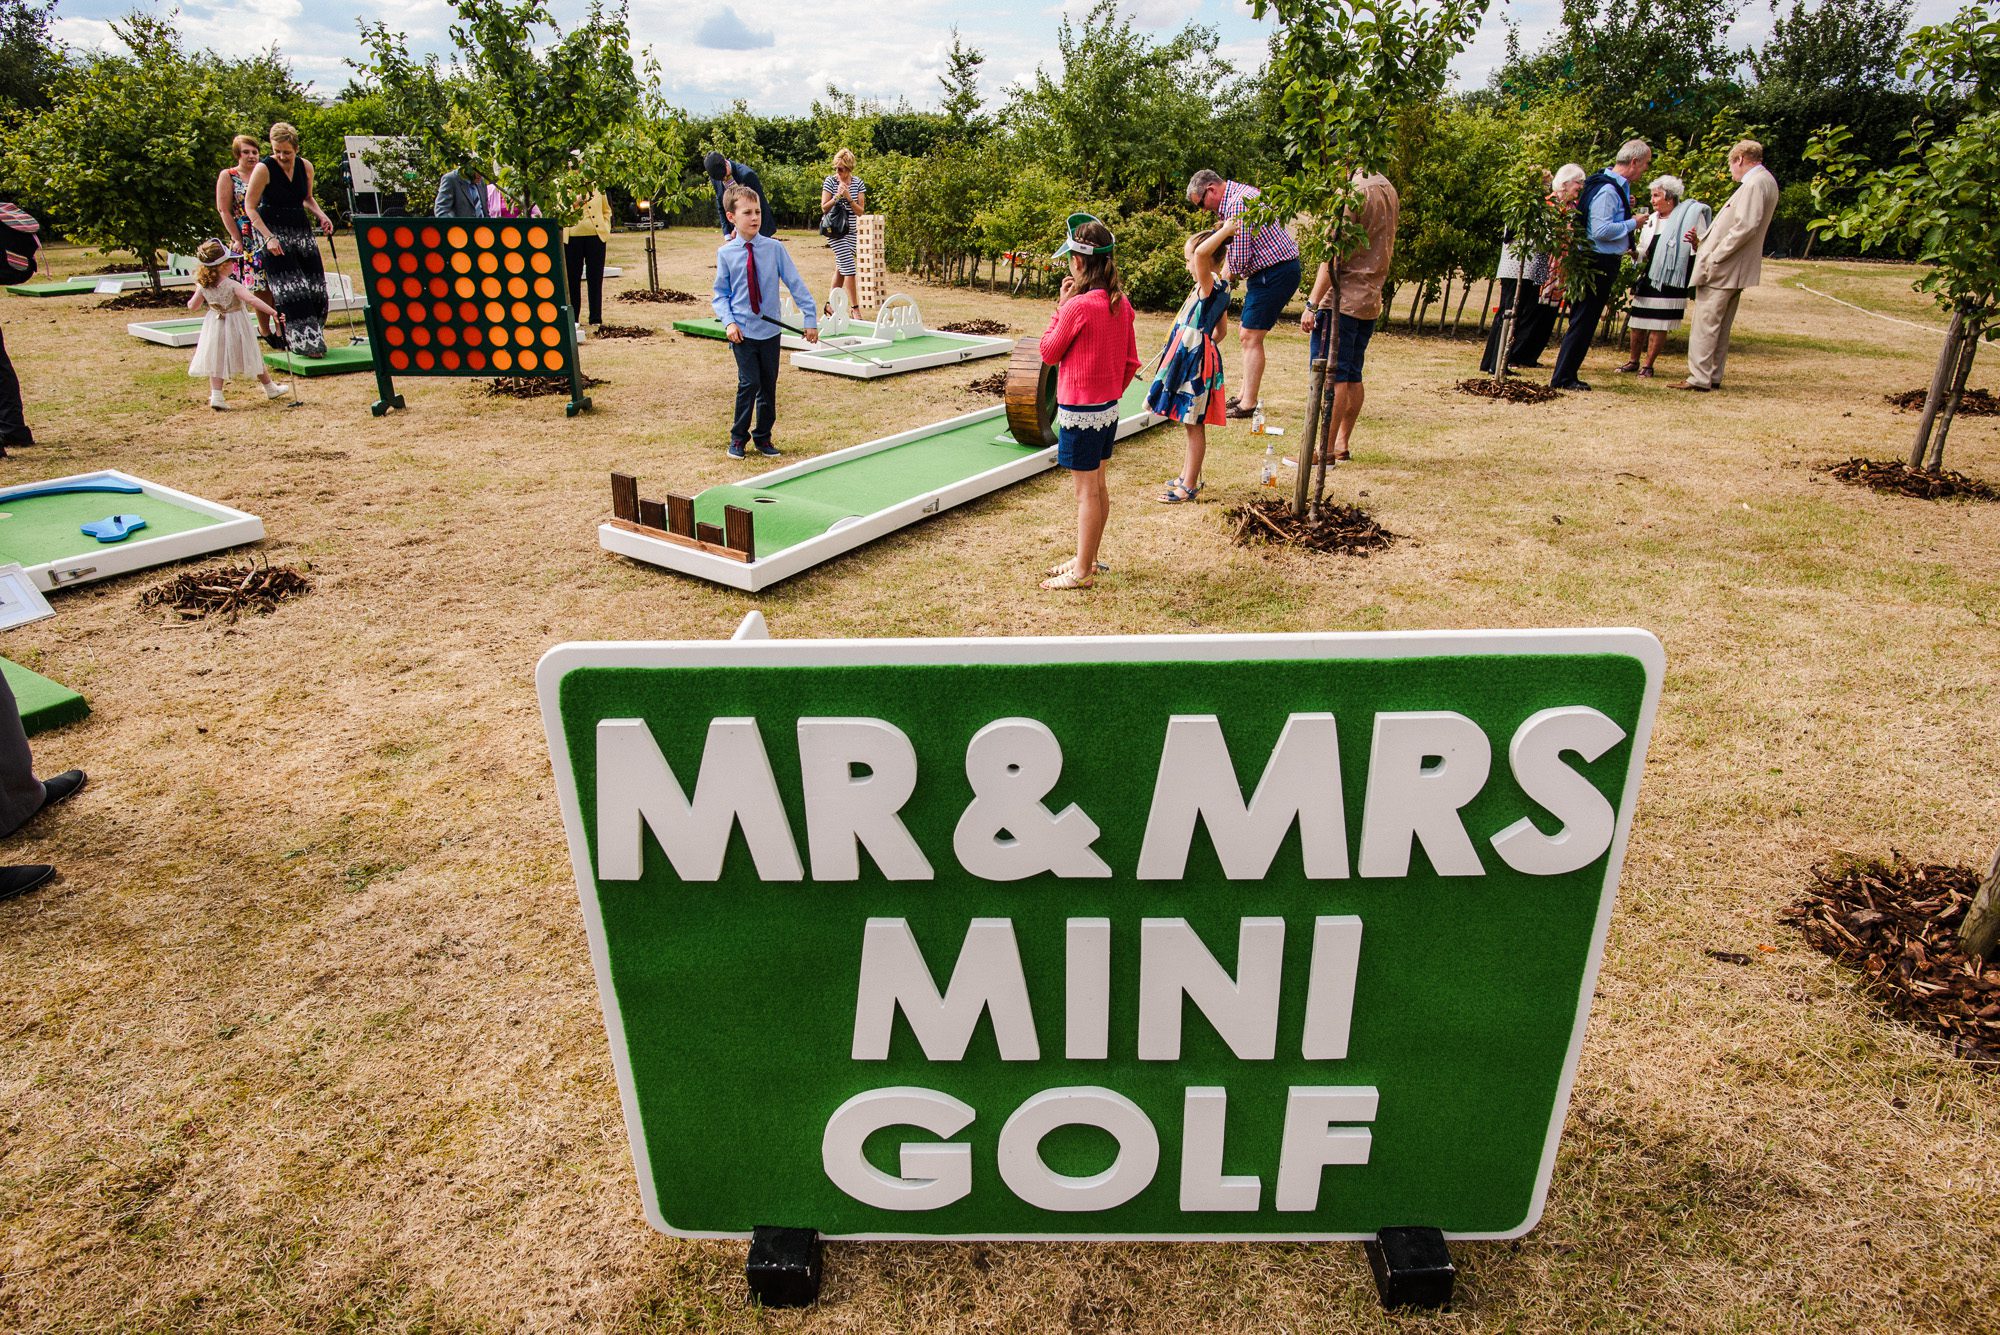 Mr and Mrs mini golf